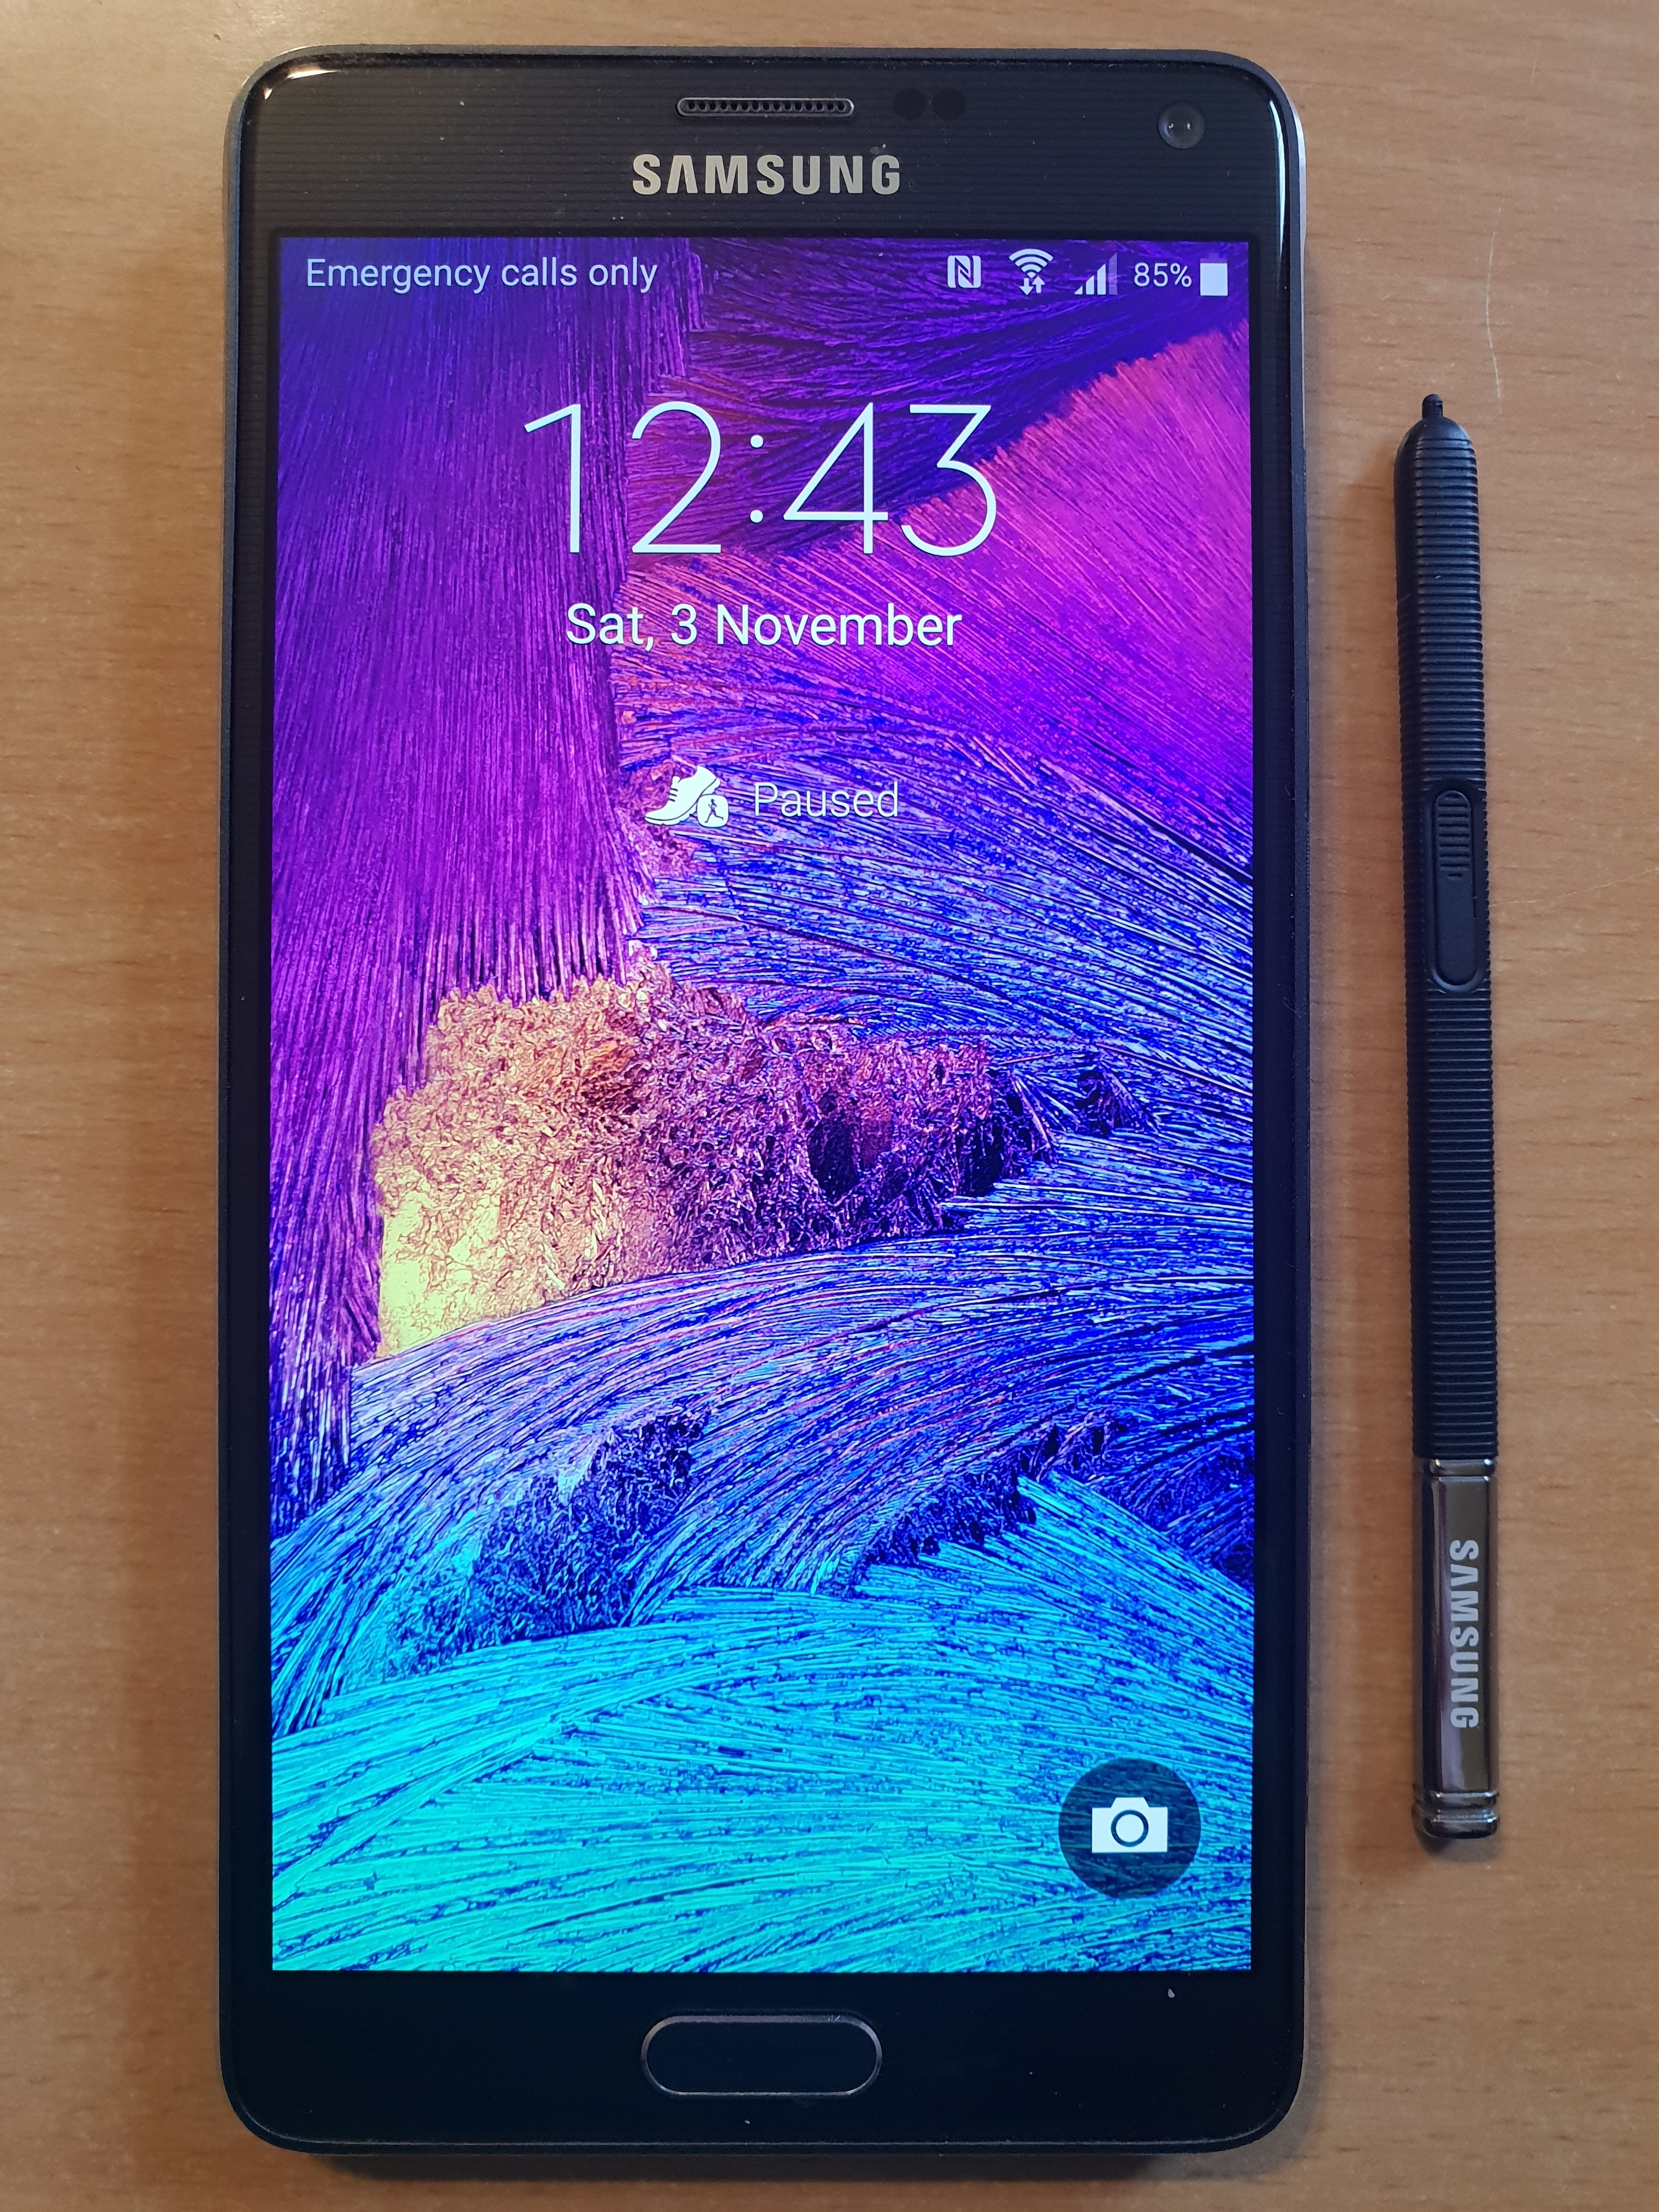 Samsung Galaxy Note 4 32GB - Black - Locked 1